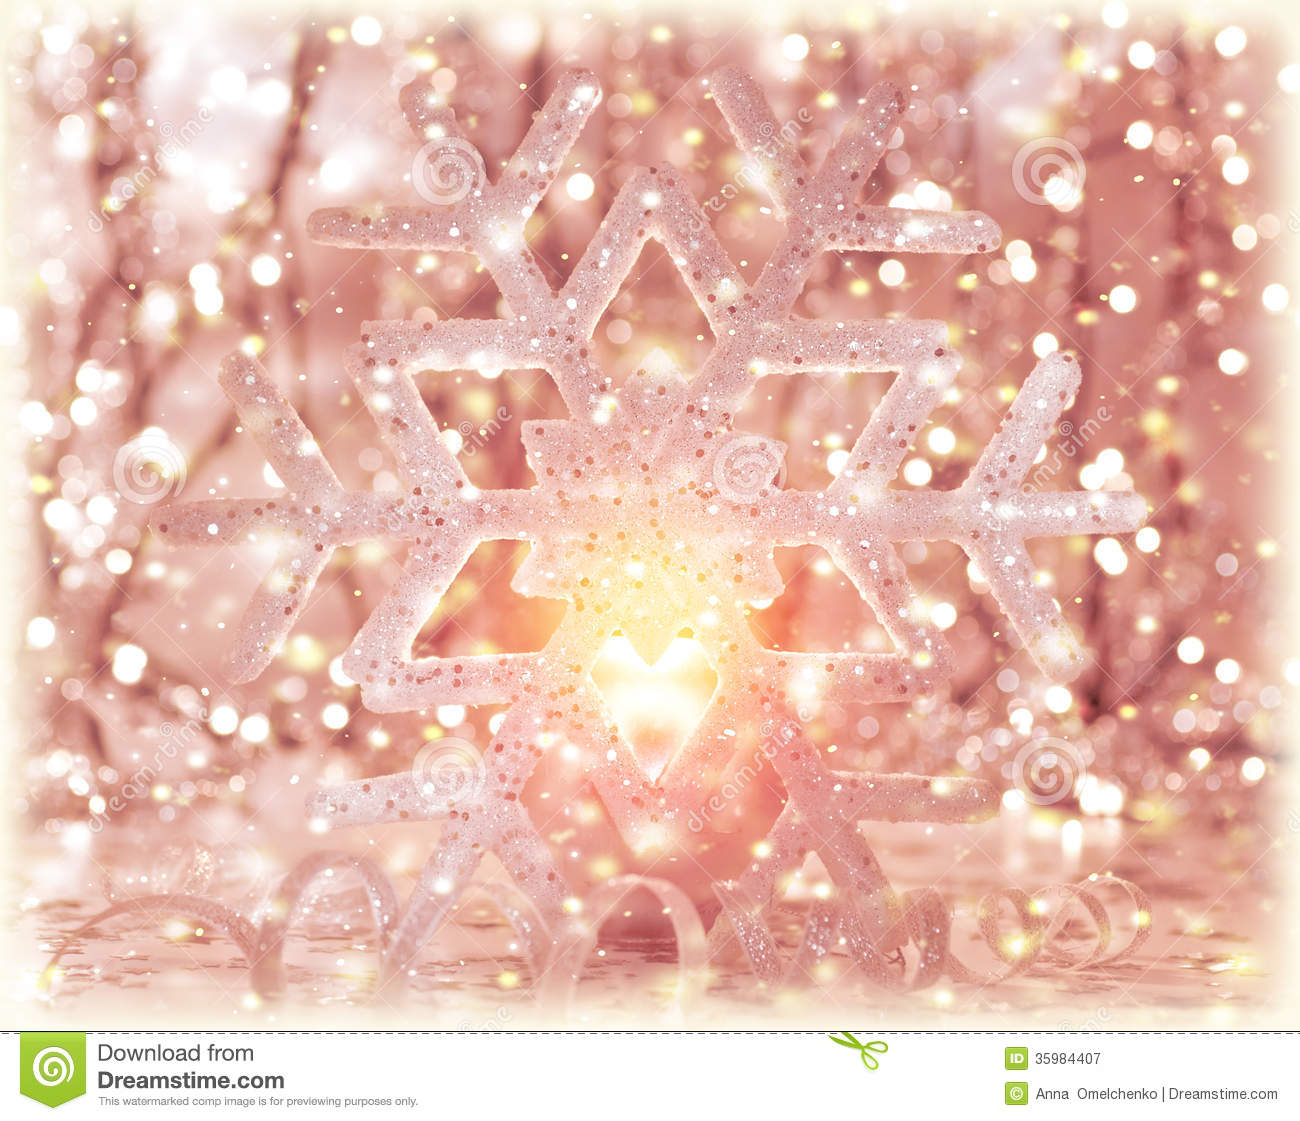 Pink Shiny Christmastime Decor Royalty Free Stock Photography   Image    